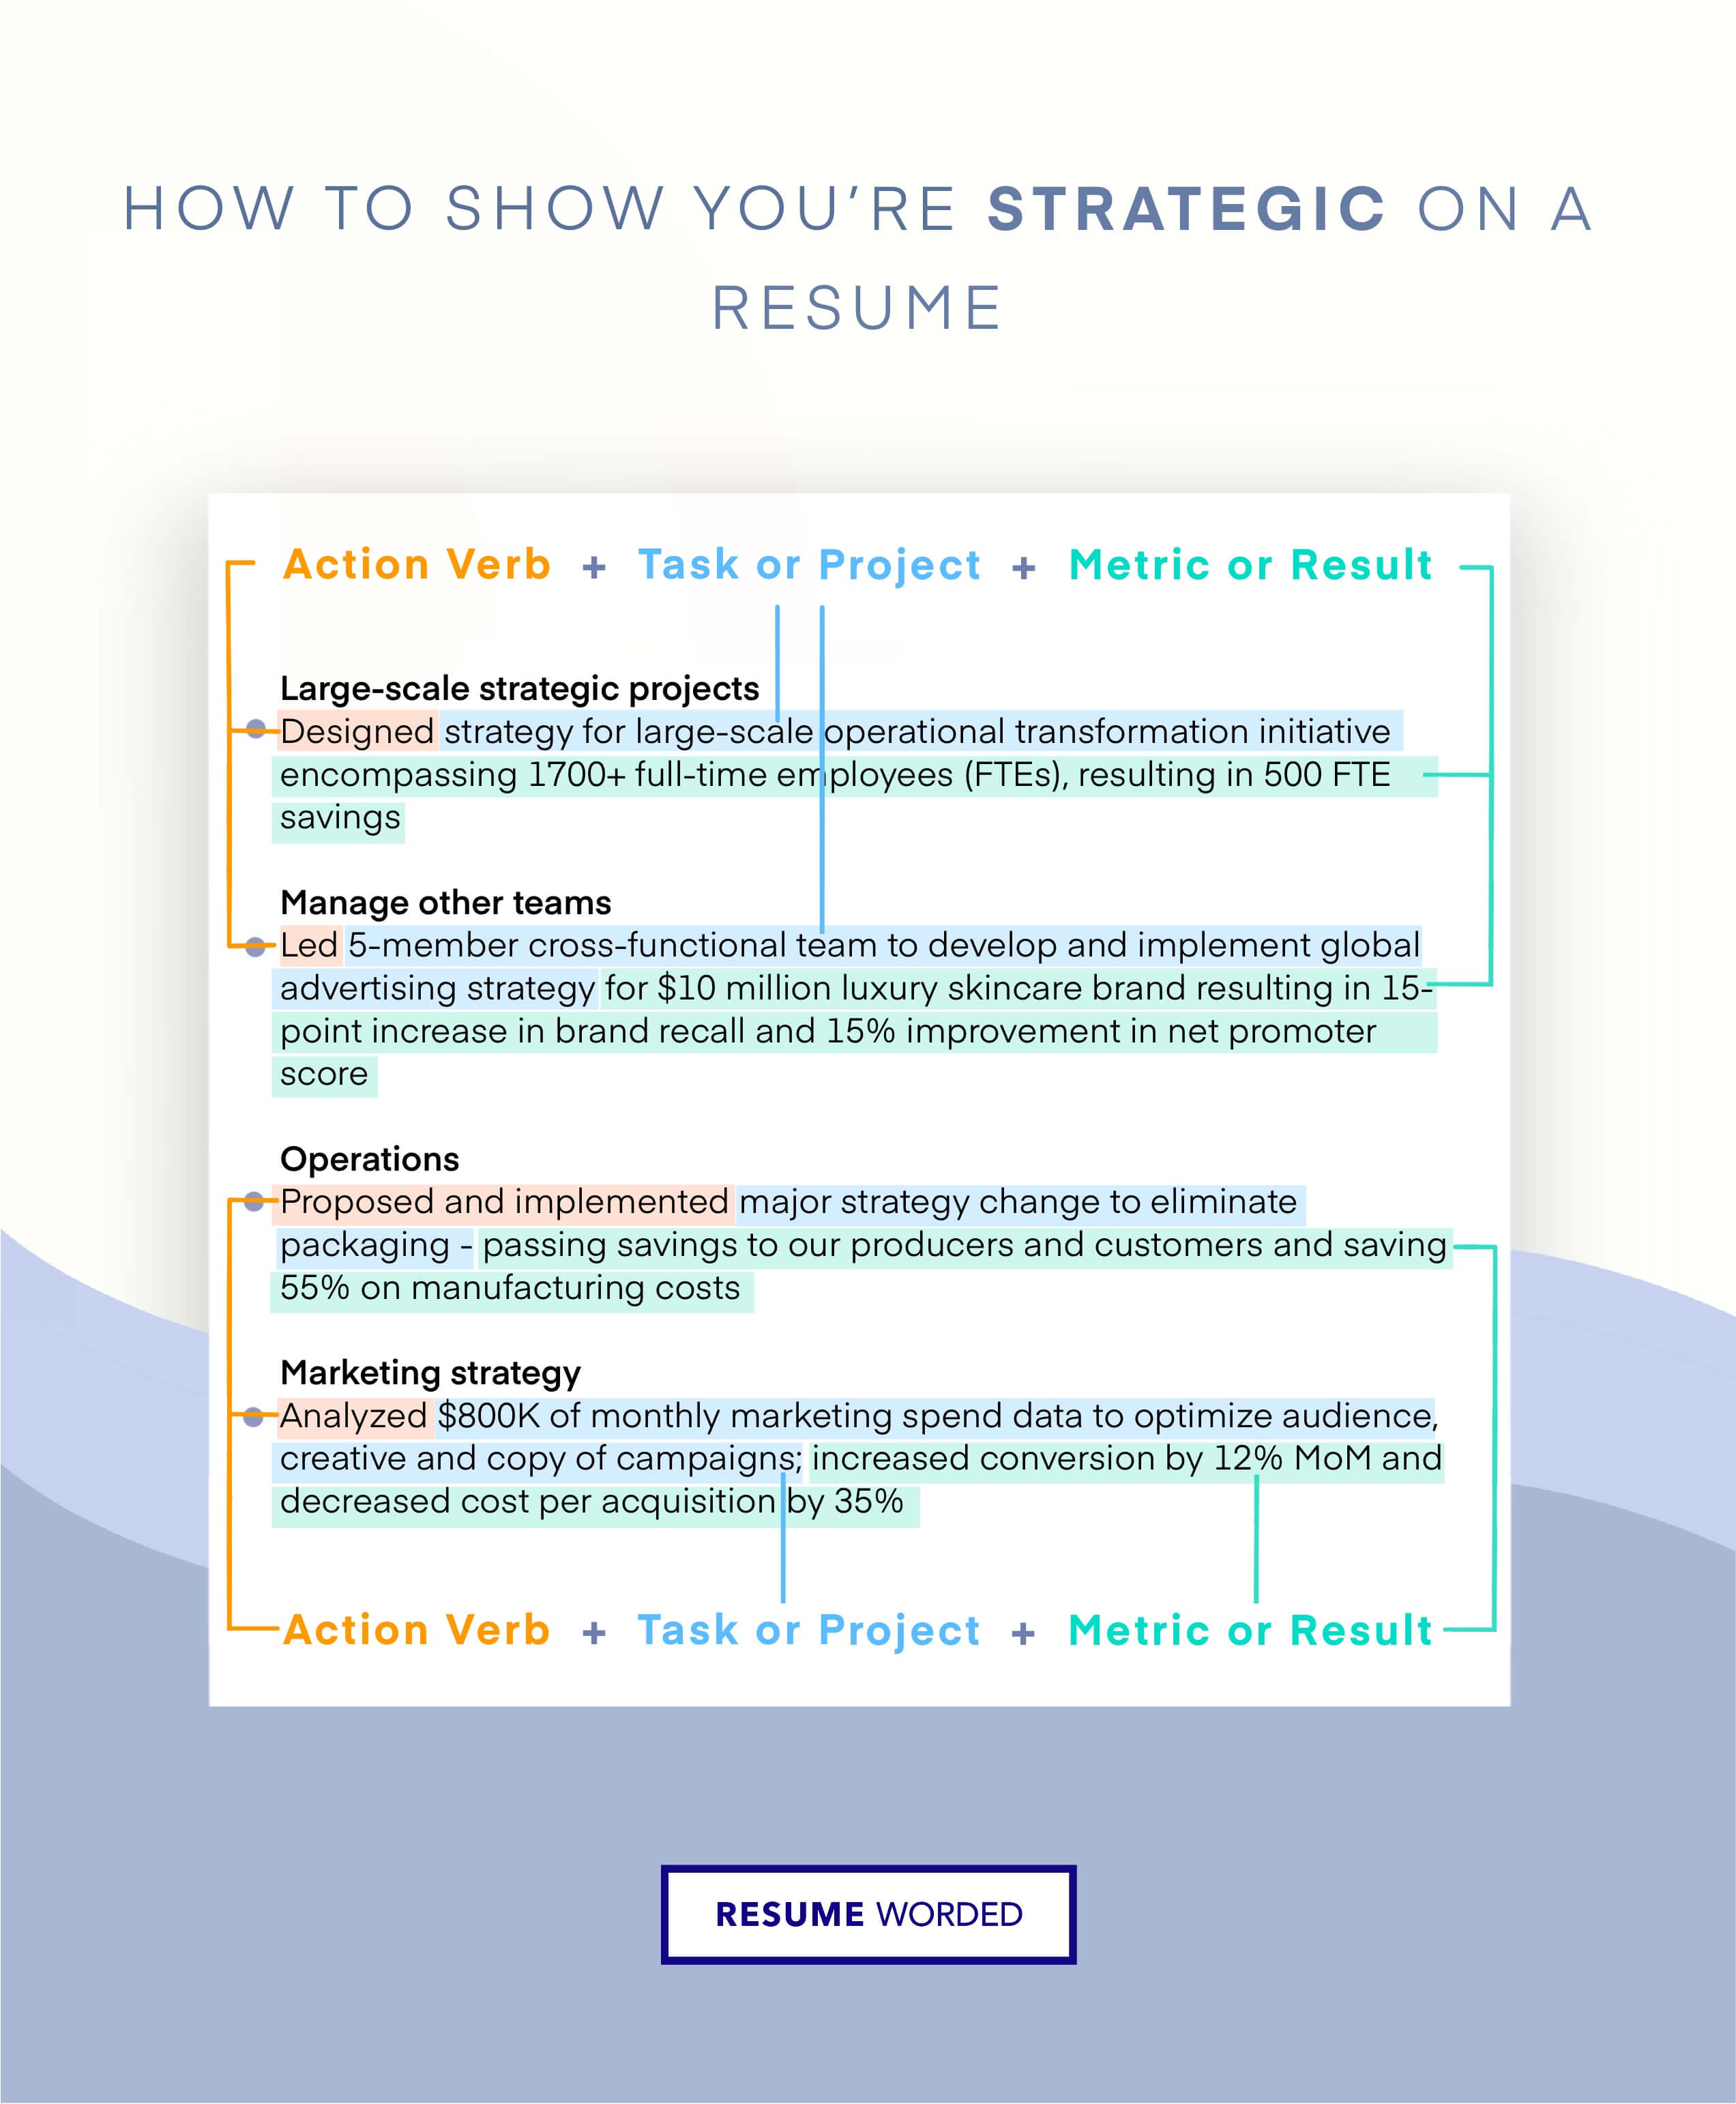 Highlight your leadership and strategic thinking - Senior Sales Executive Resume